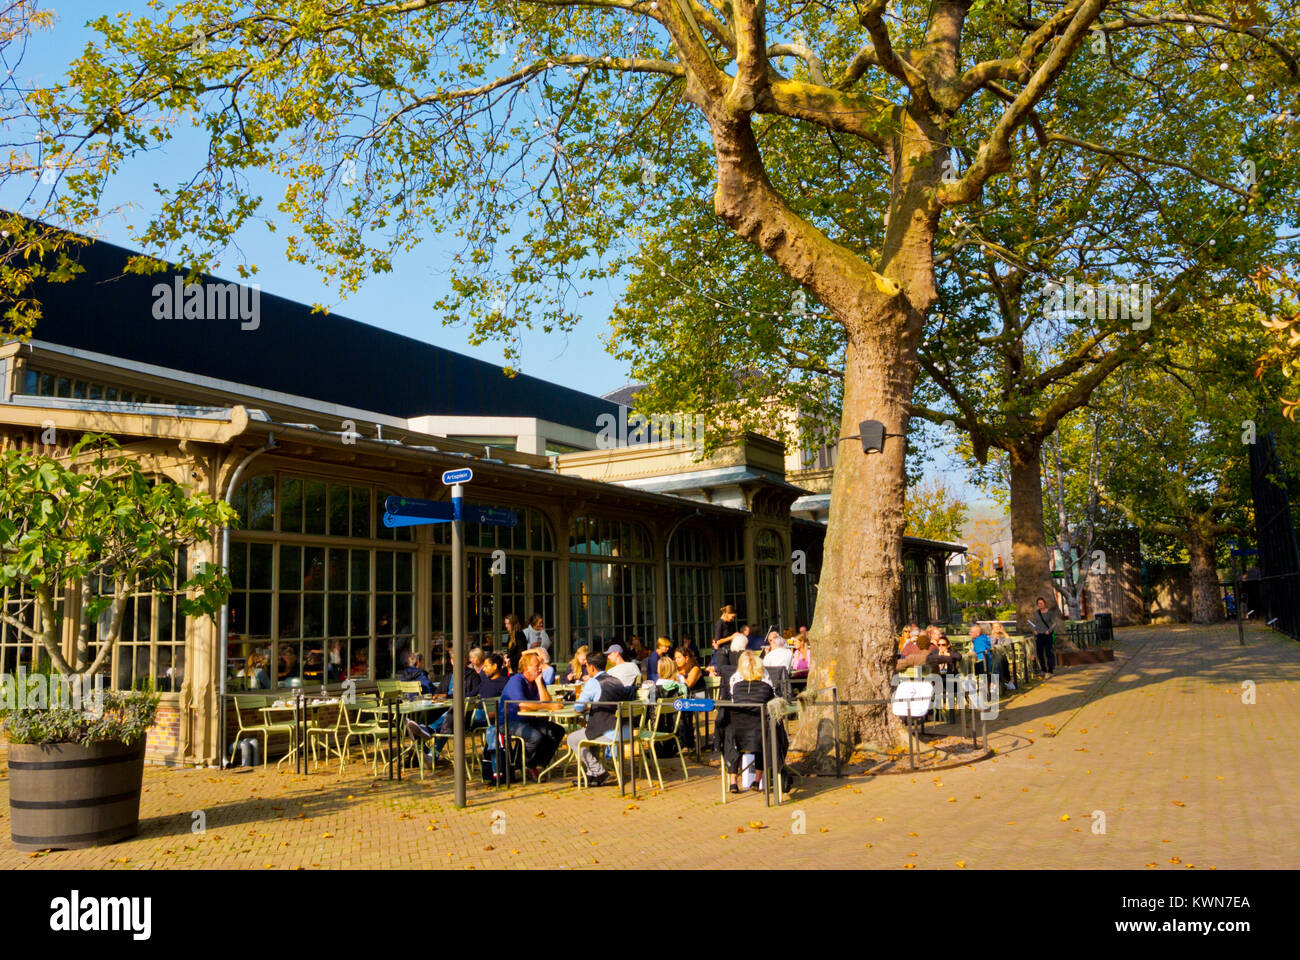 Cafe restaurant De Plantage, Artisplein, Artis, zoological garden, Amsterdam, The Netherlands Stock Photo